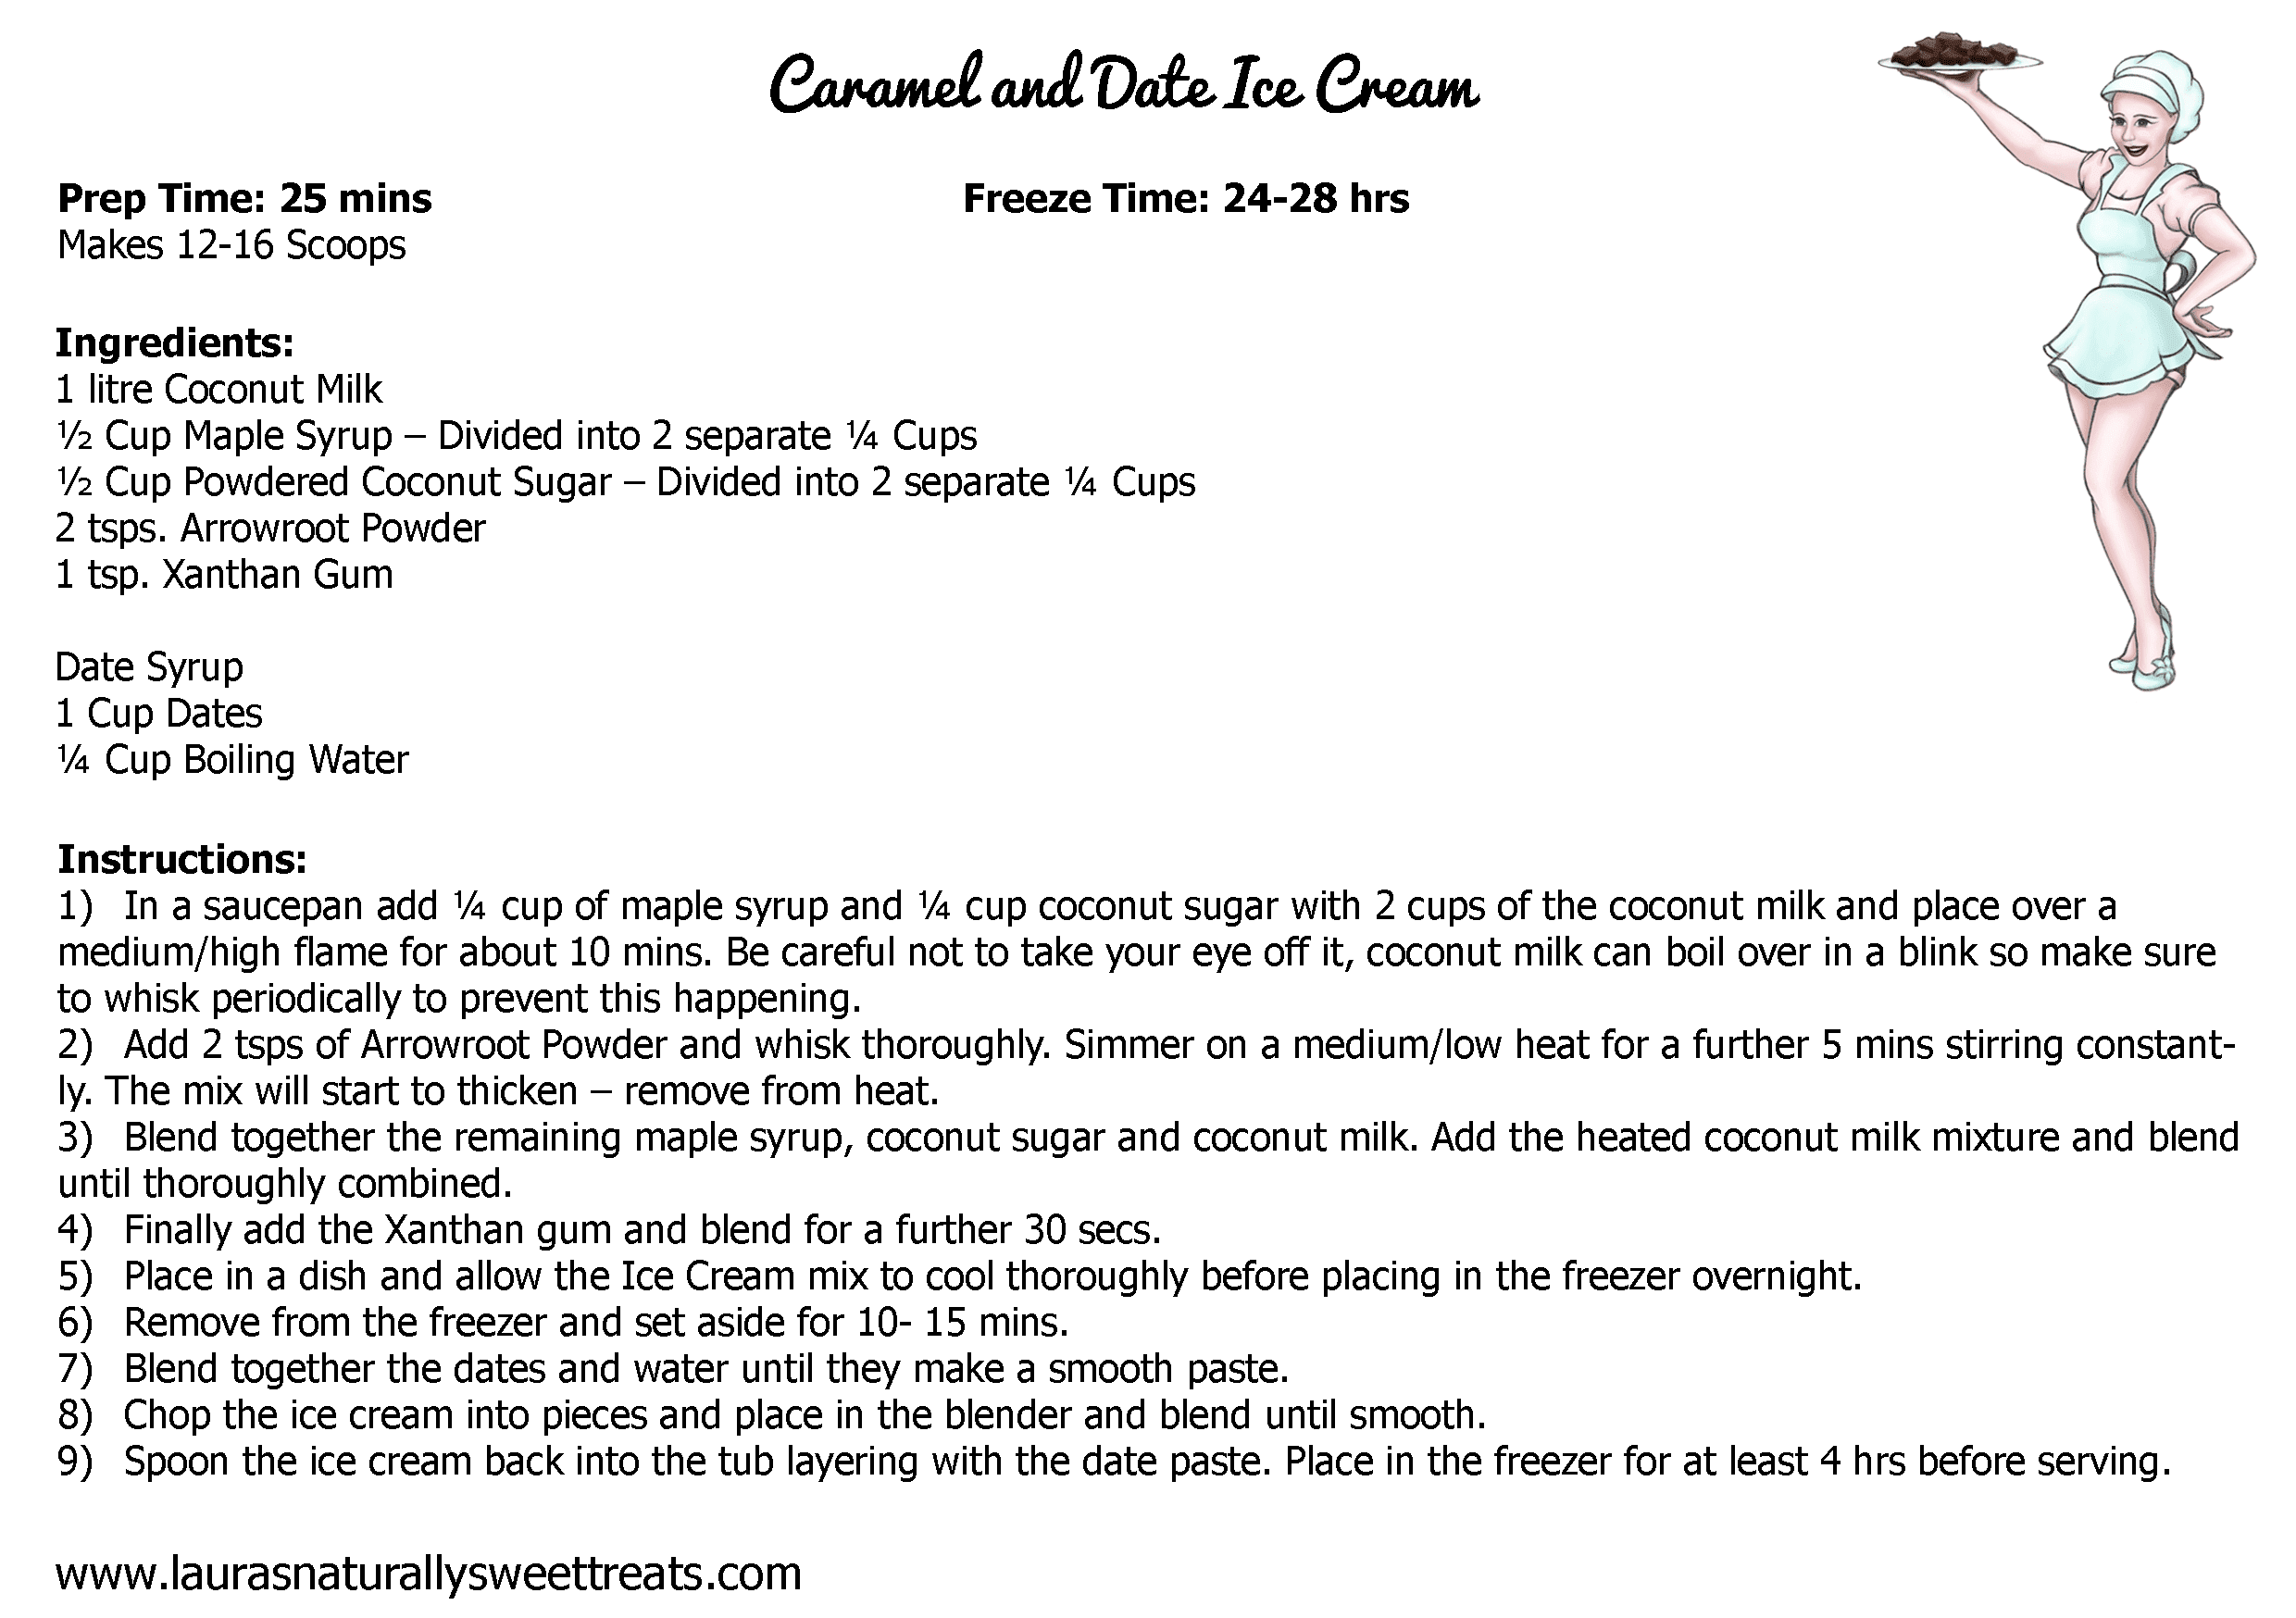 caramel and date ice cream recipe card